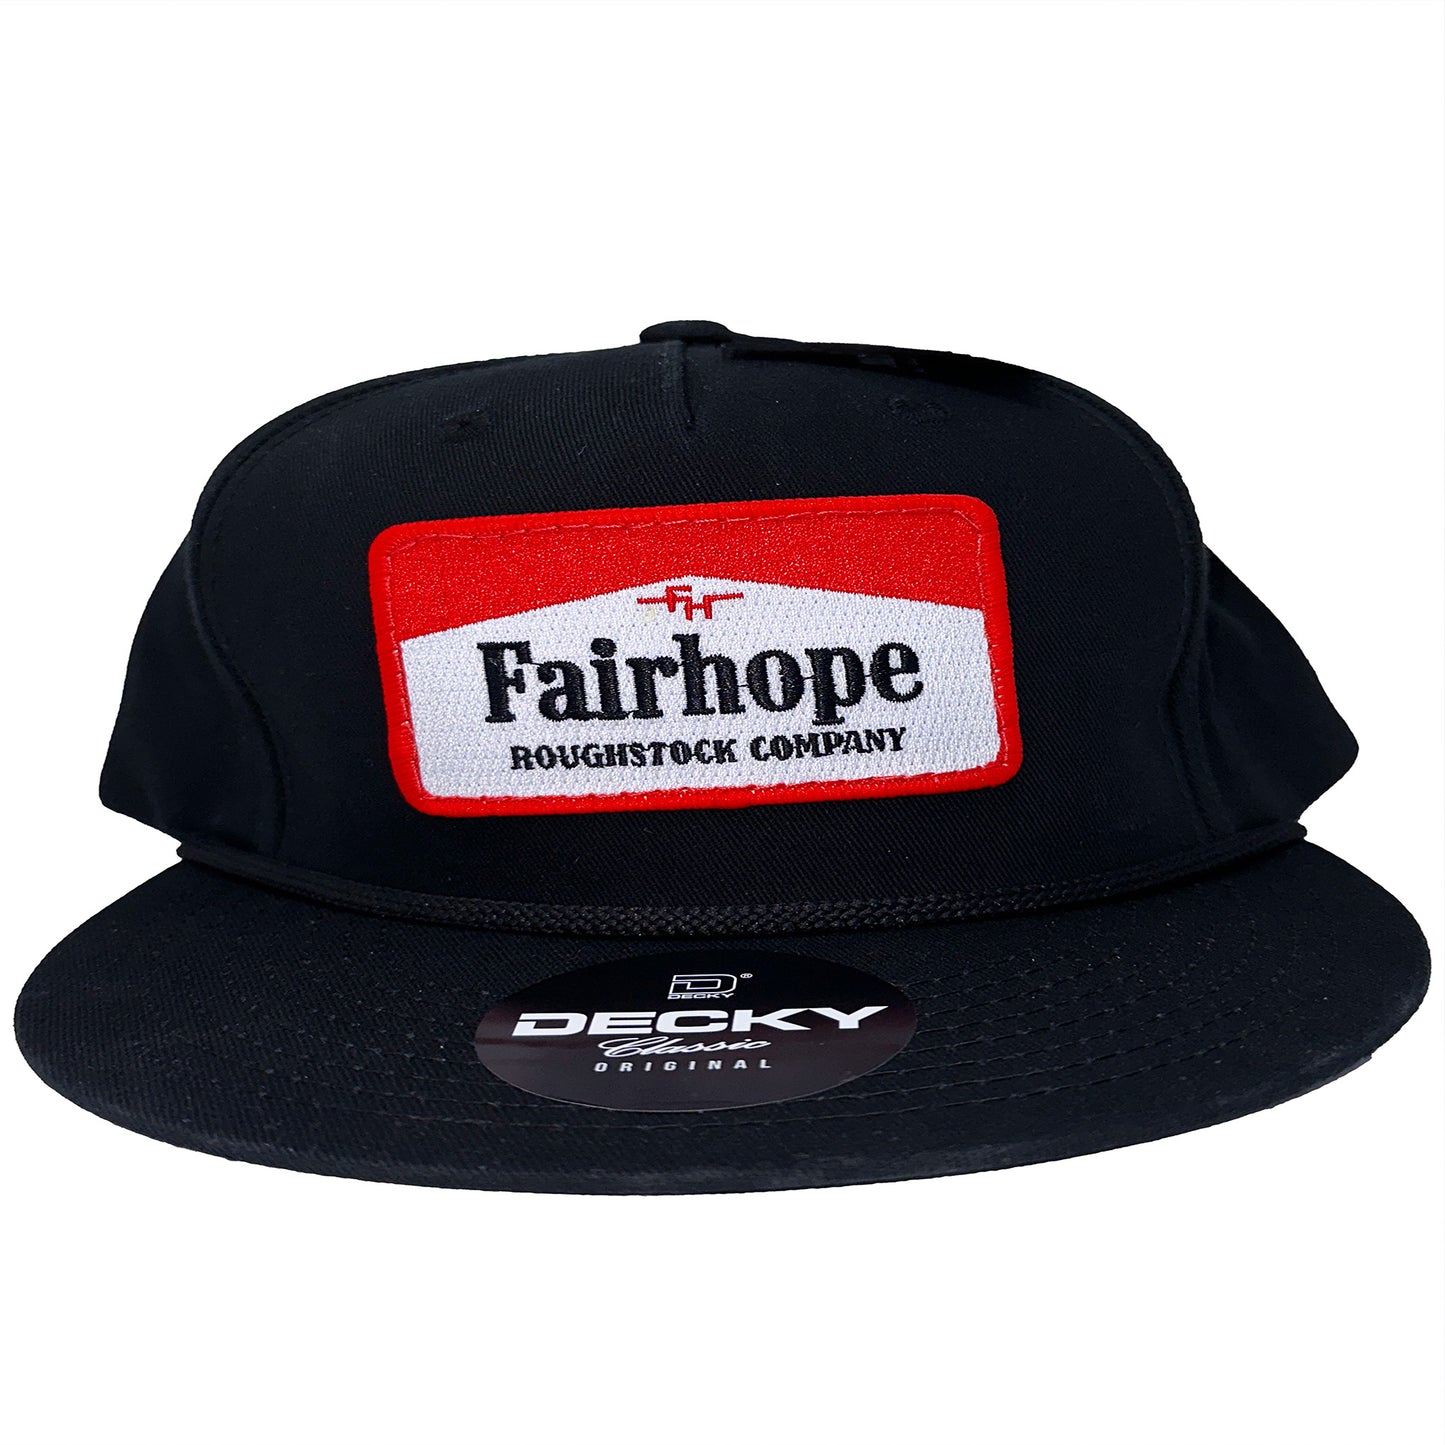 “The Cowboy Killer" Rope Hat - Black - Fairhope Roughstock Company